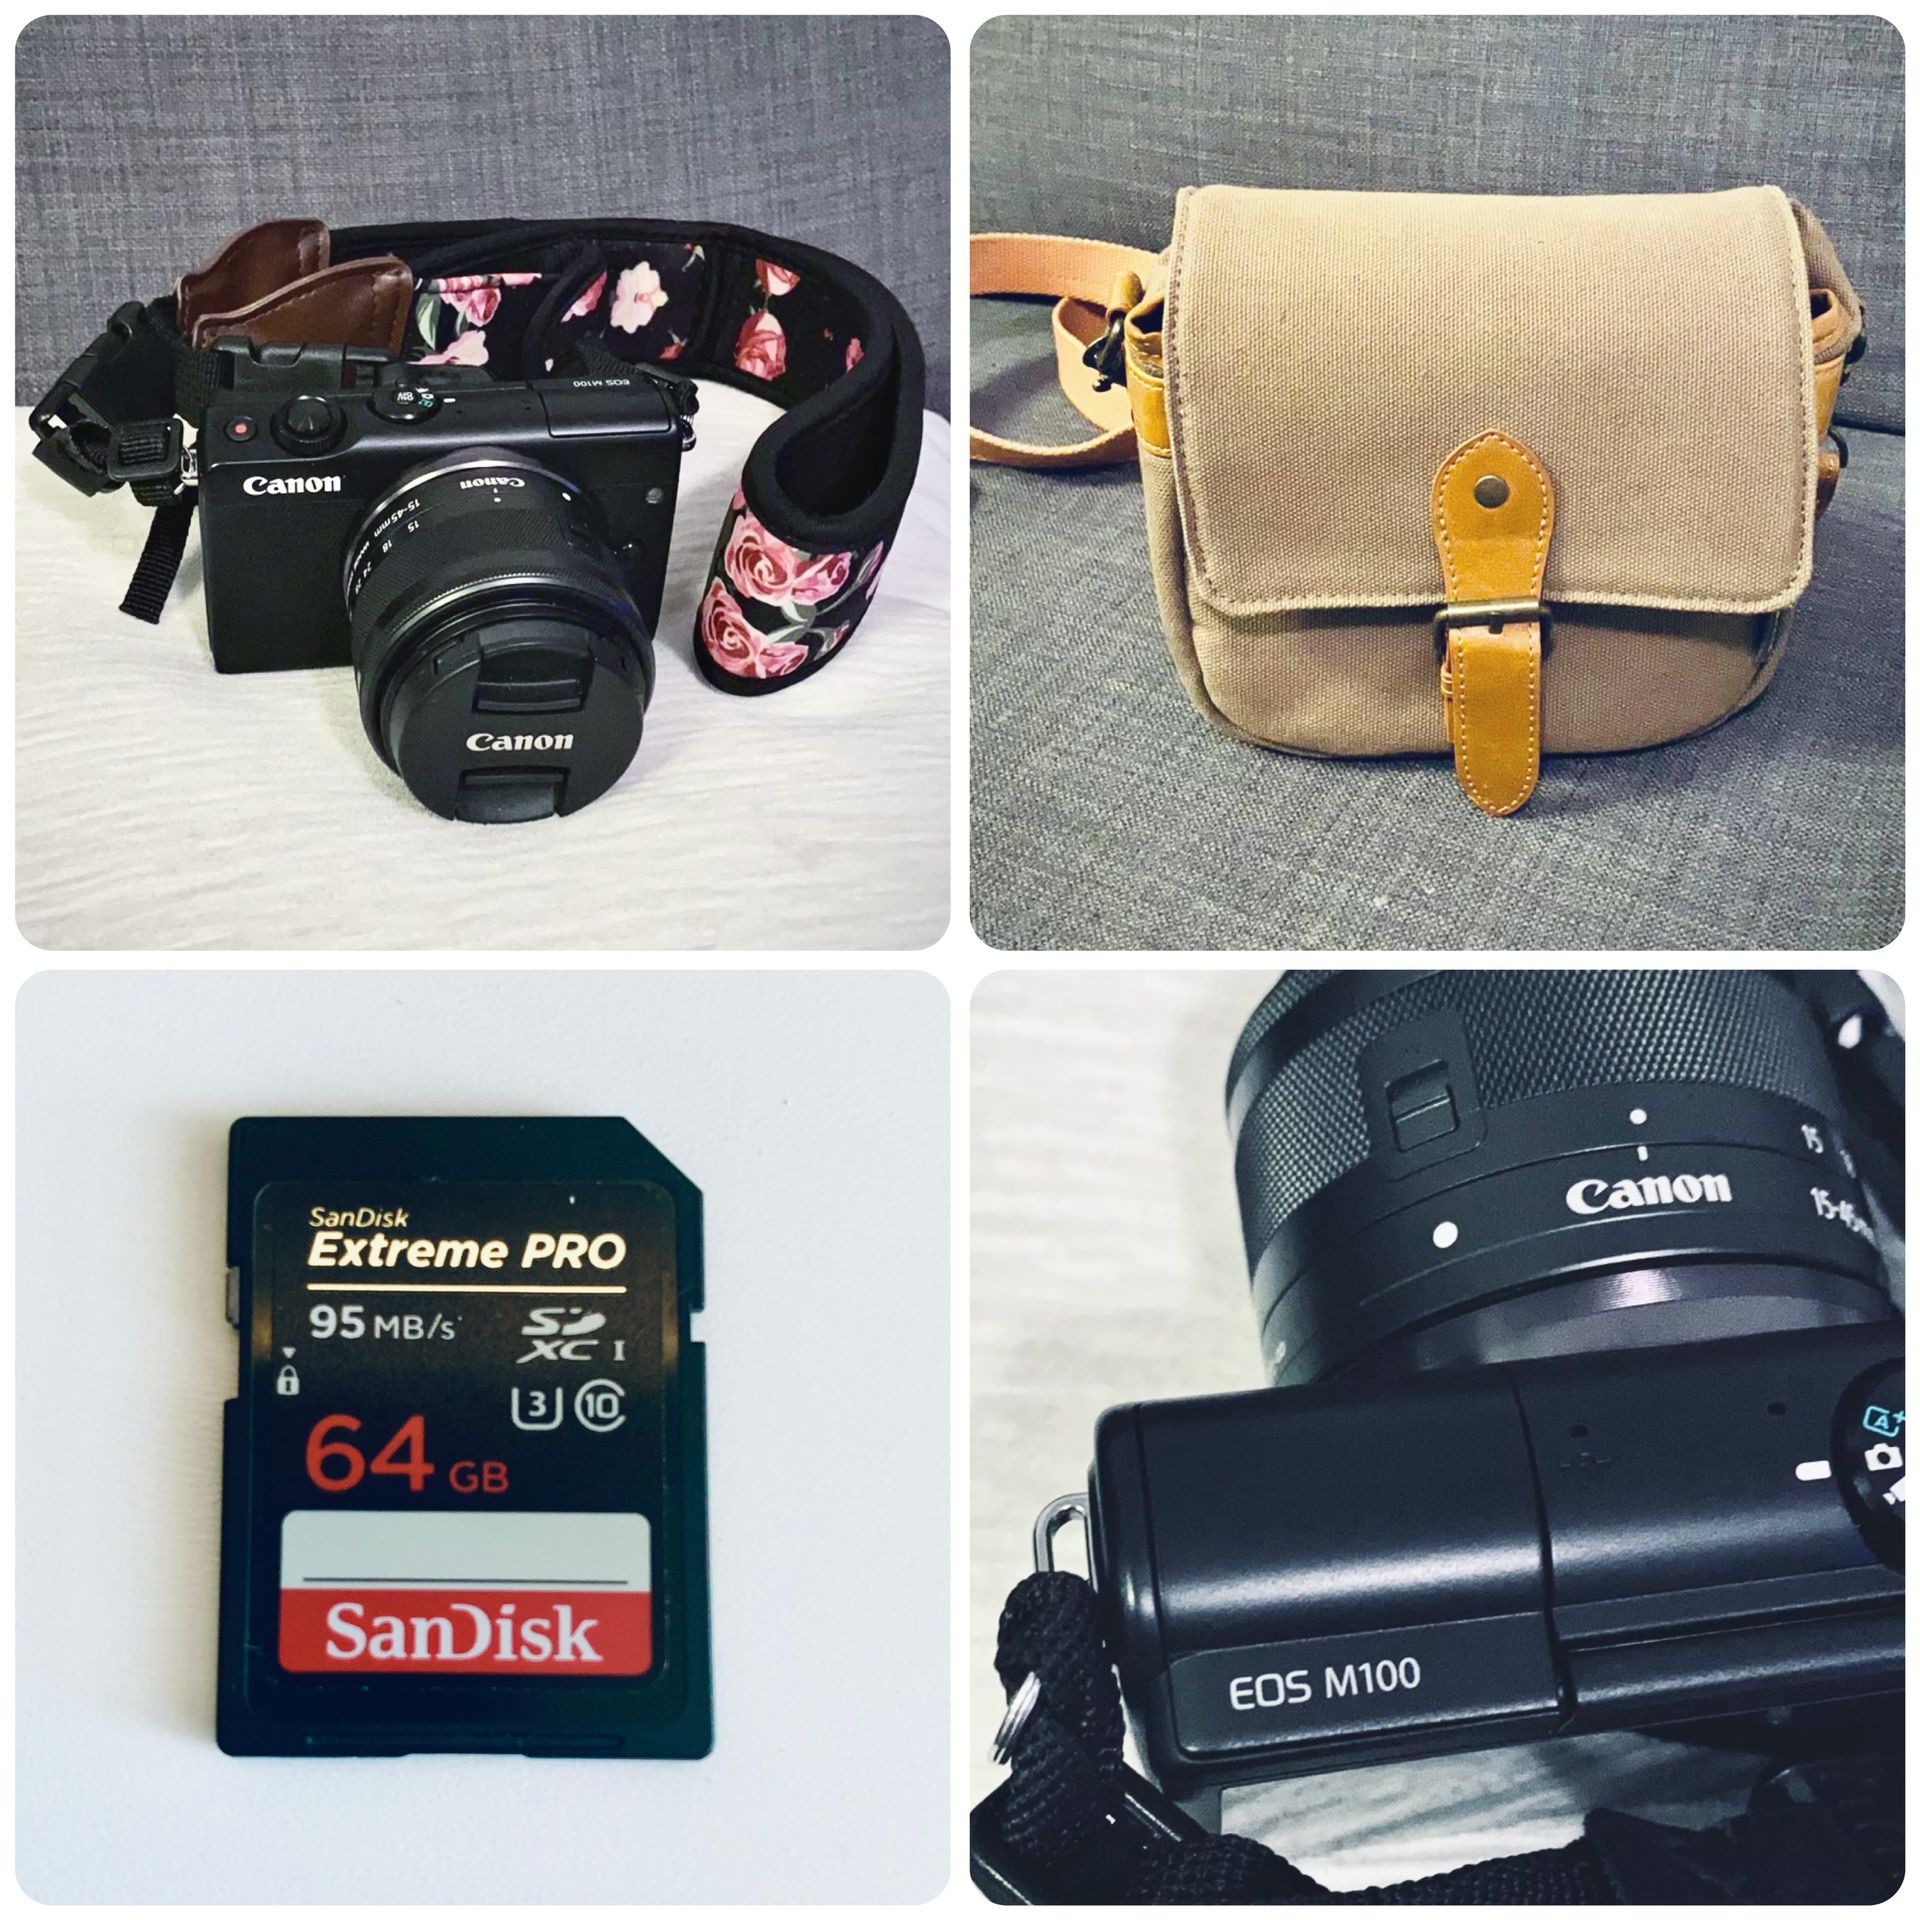 Canon EOS M100 - 64GB SD Card and Camera Bag